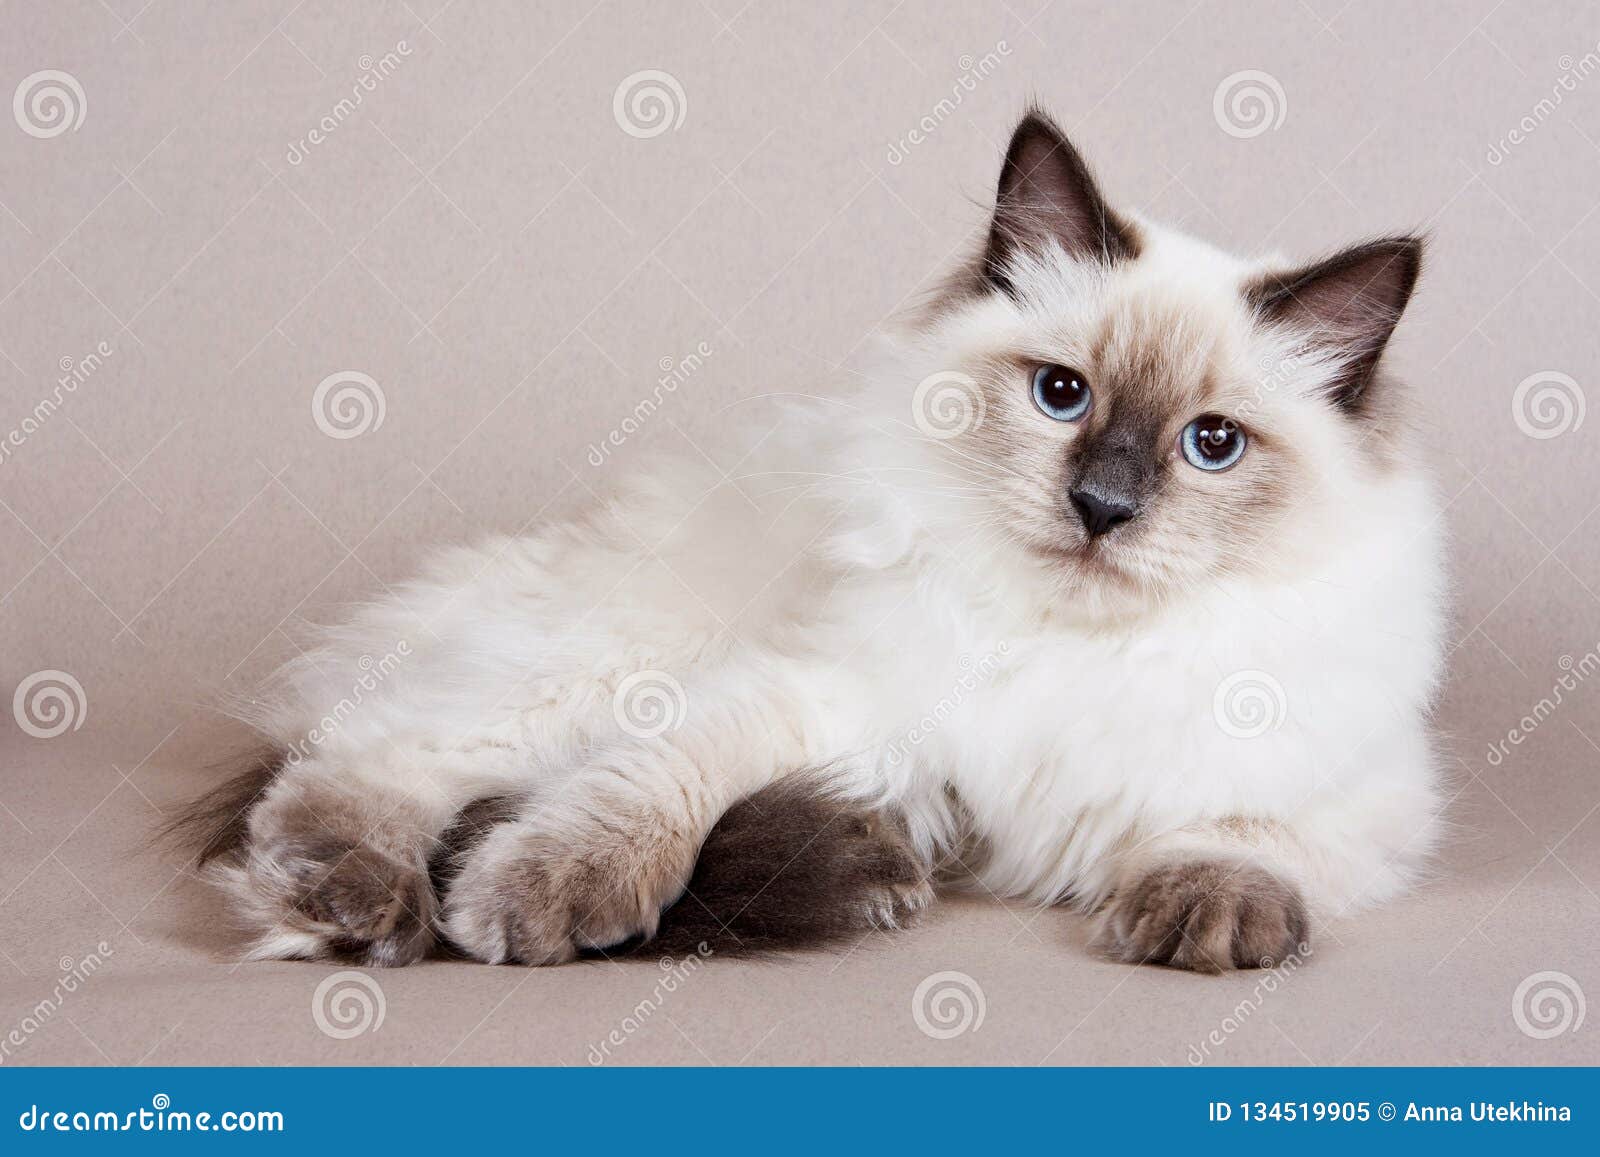 Fluffy White Kitten Siberian Cats Stock Image - Image of sweet, laying ...